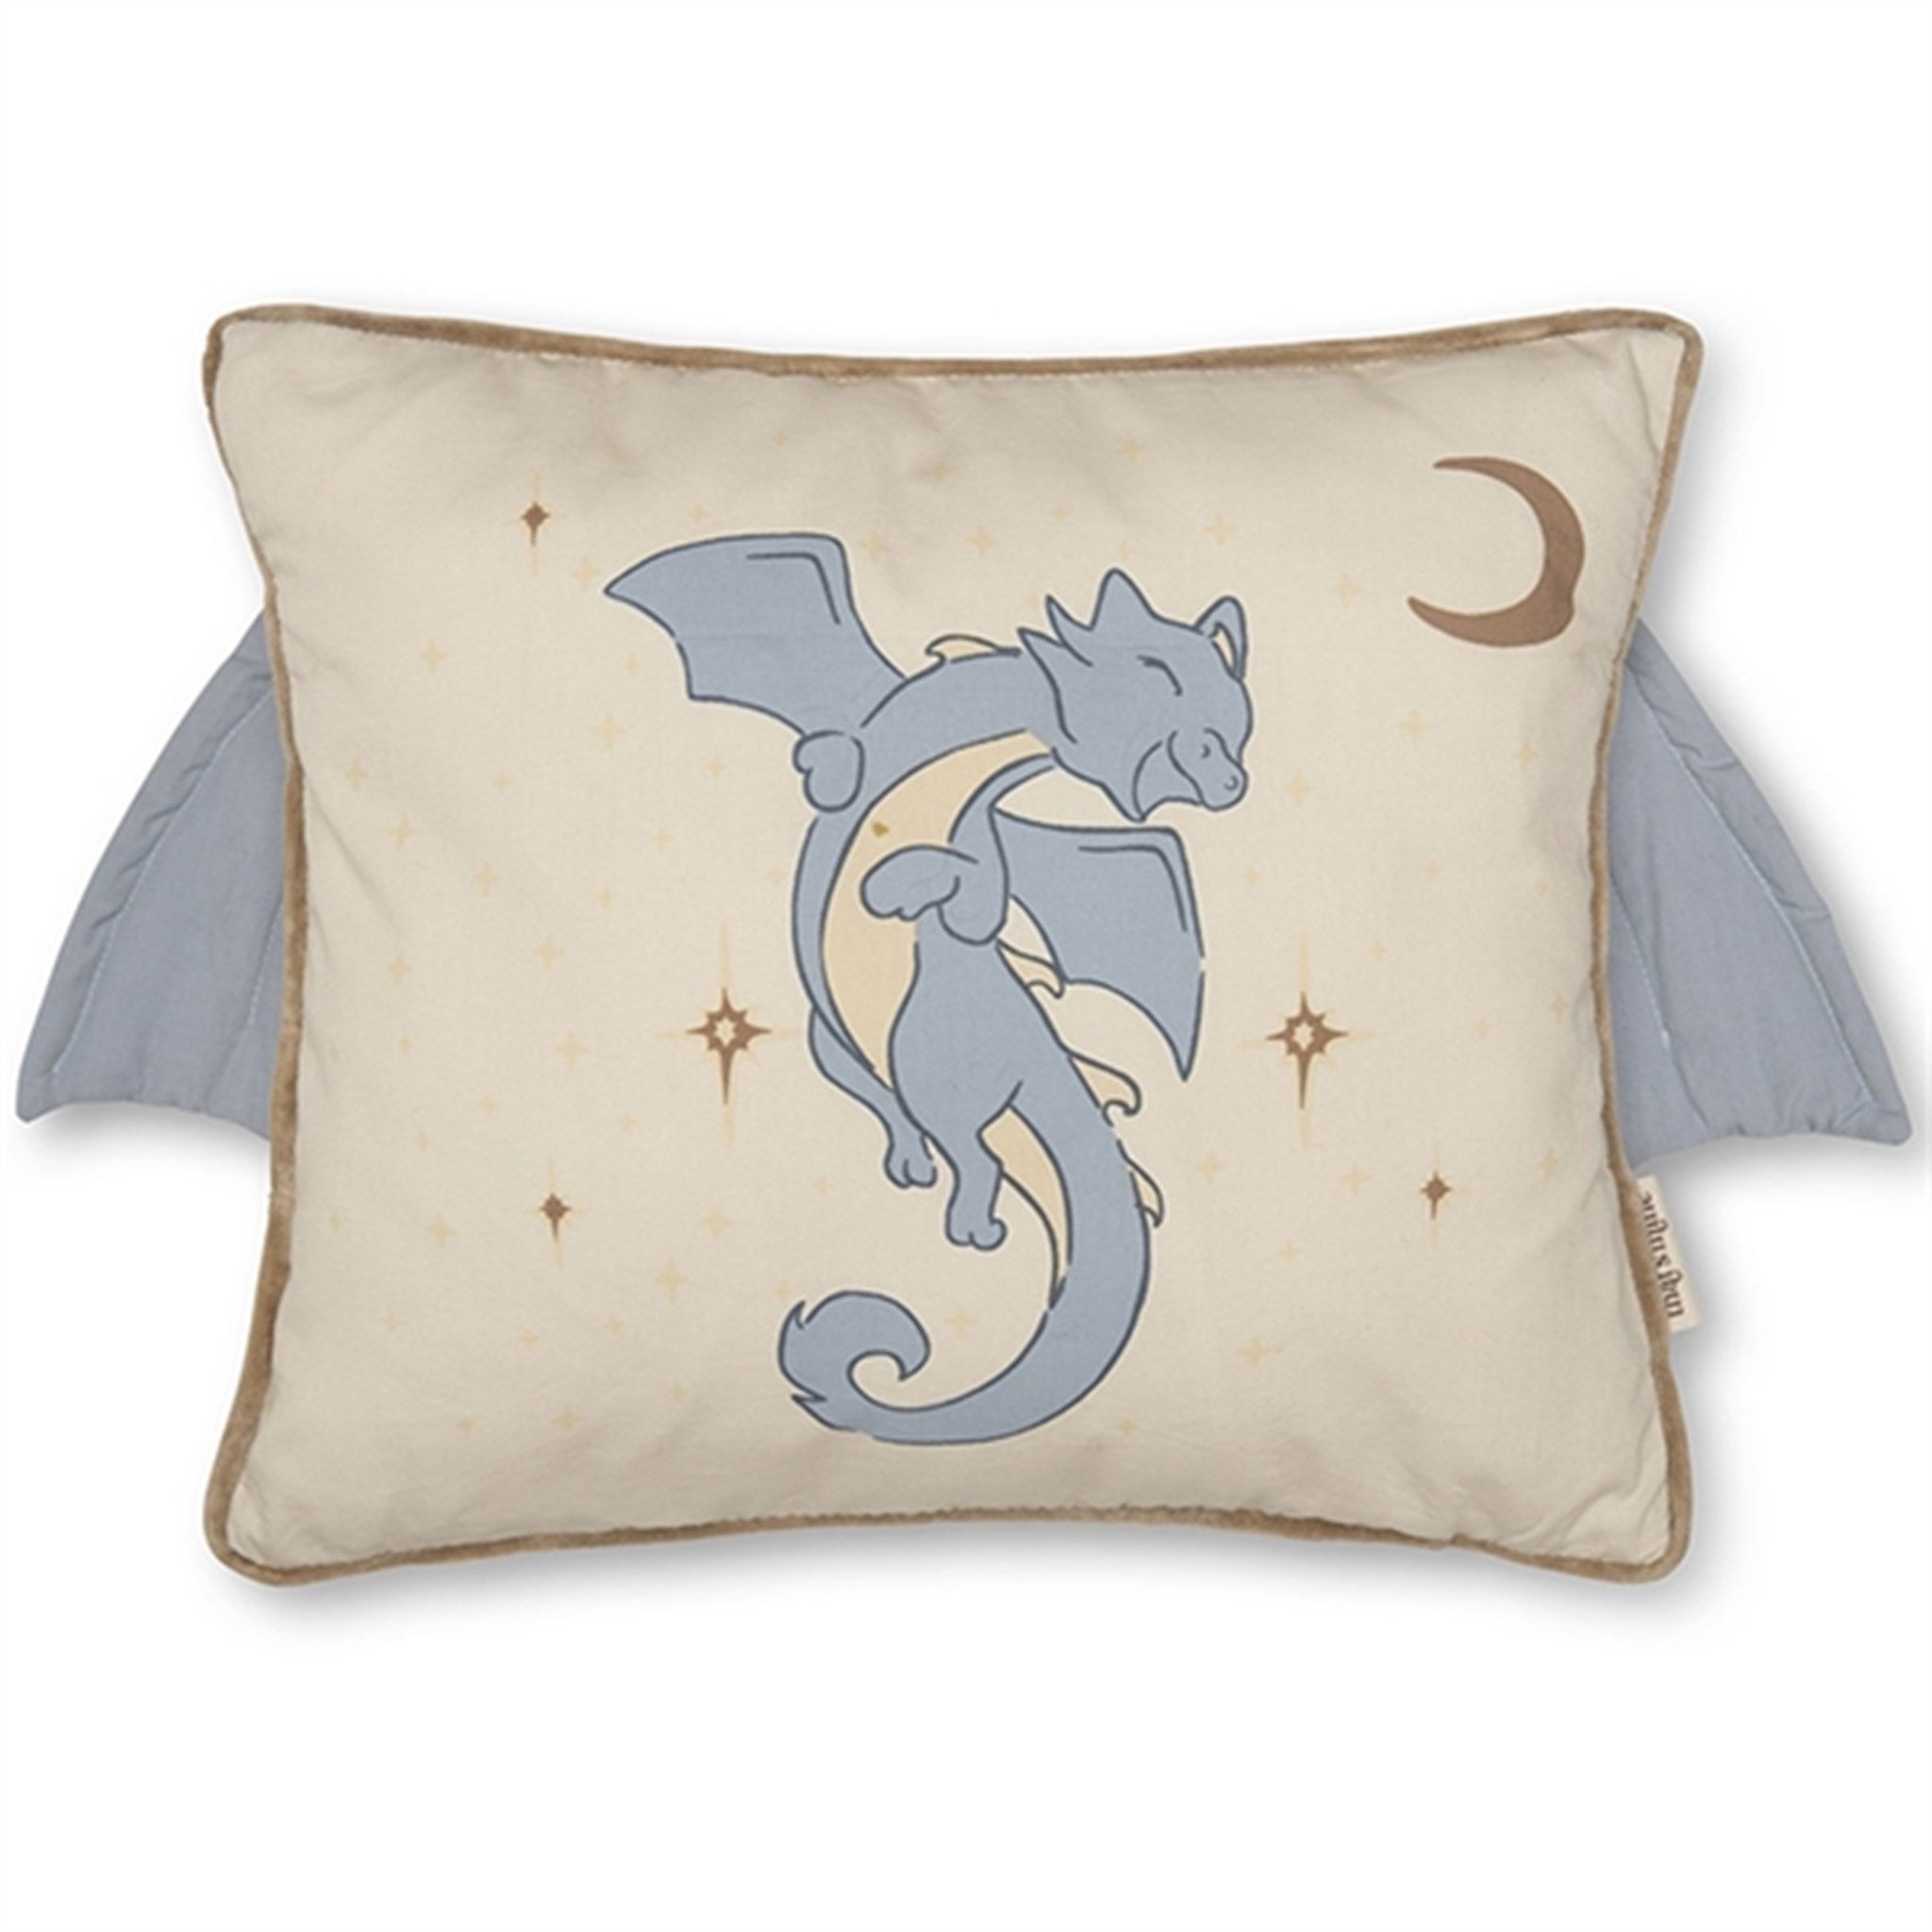 That's Mine Pillows Melva Luna Dragons